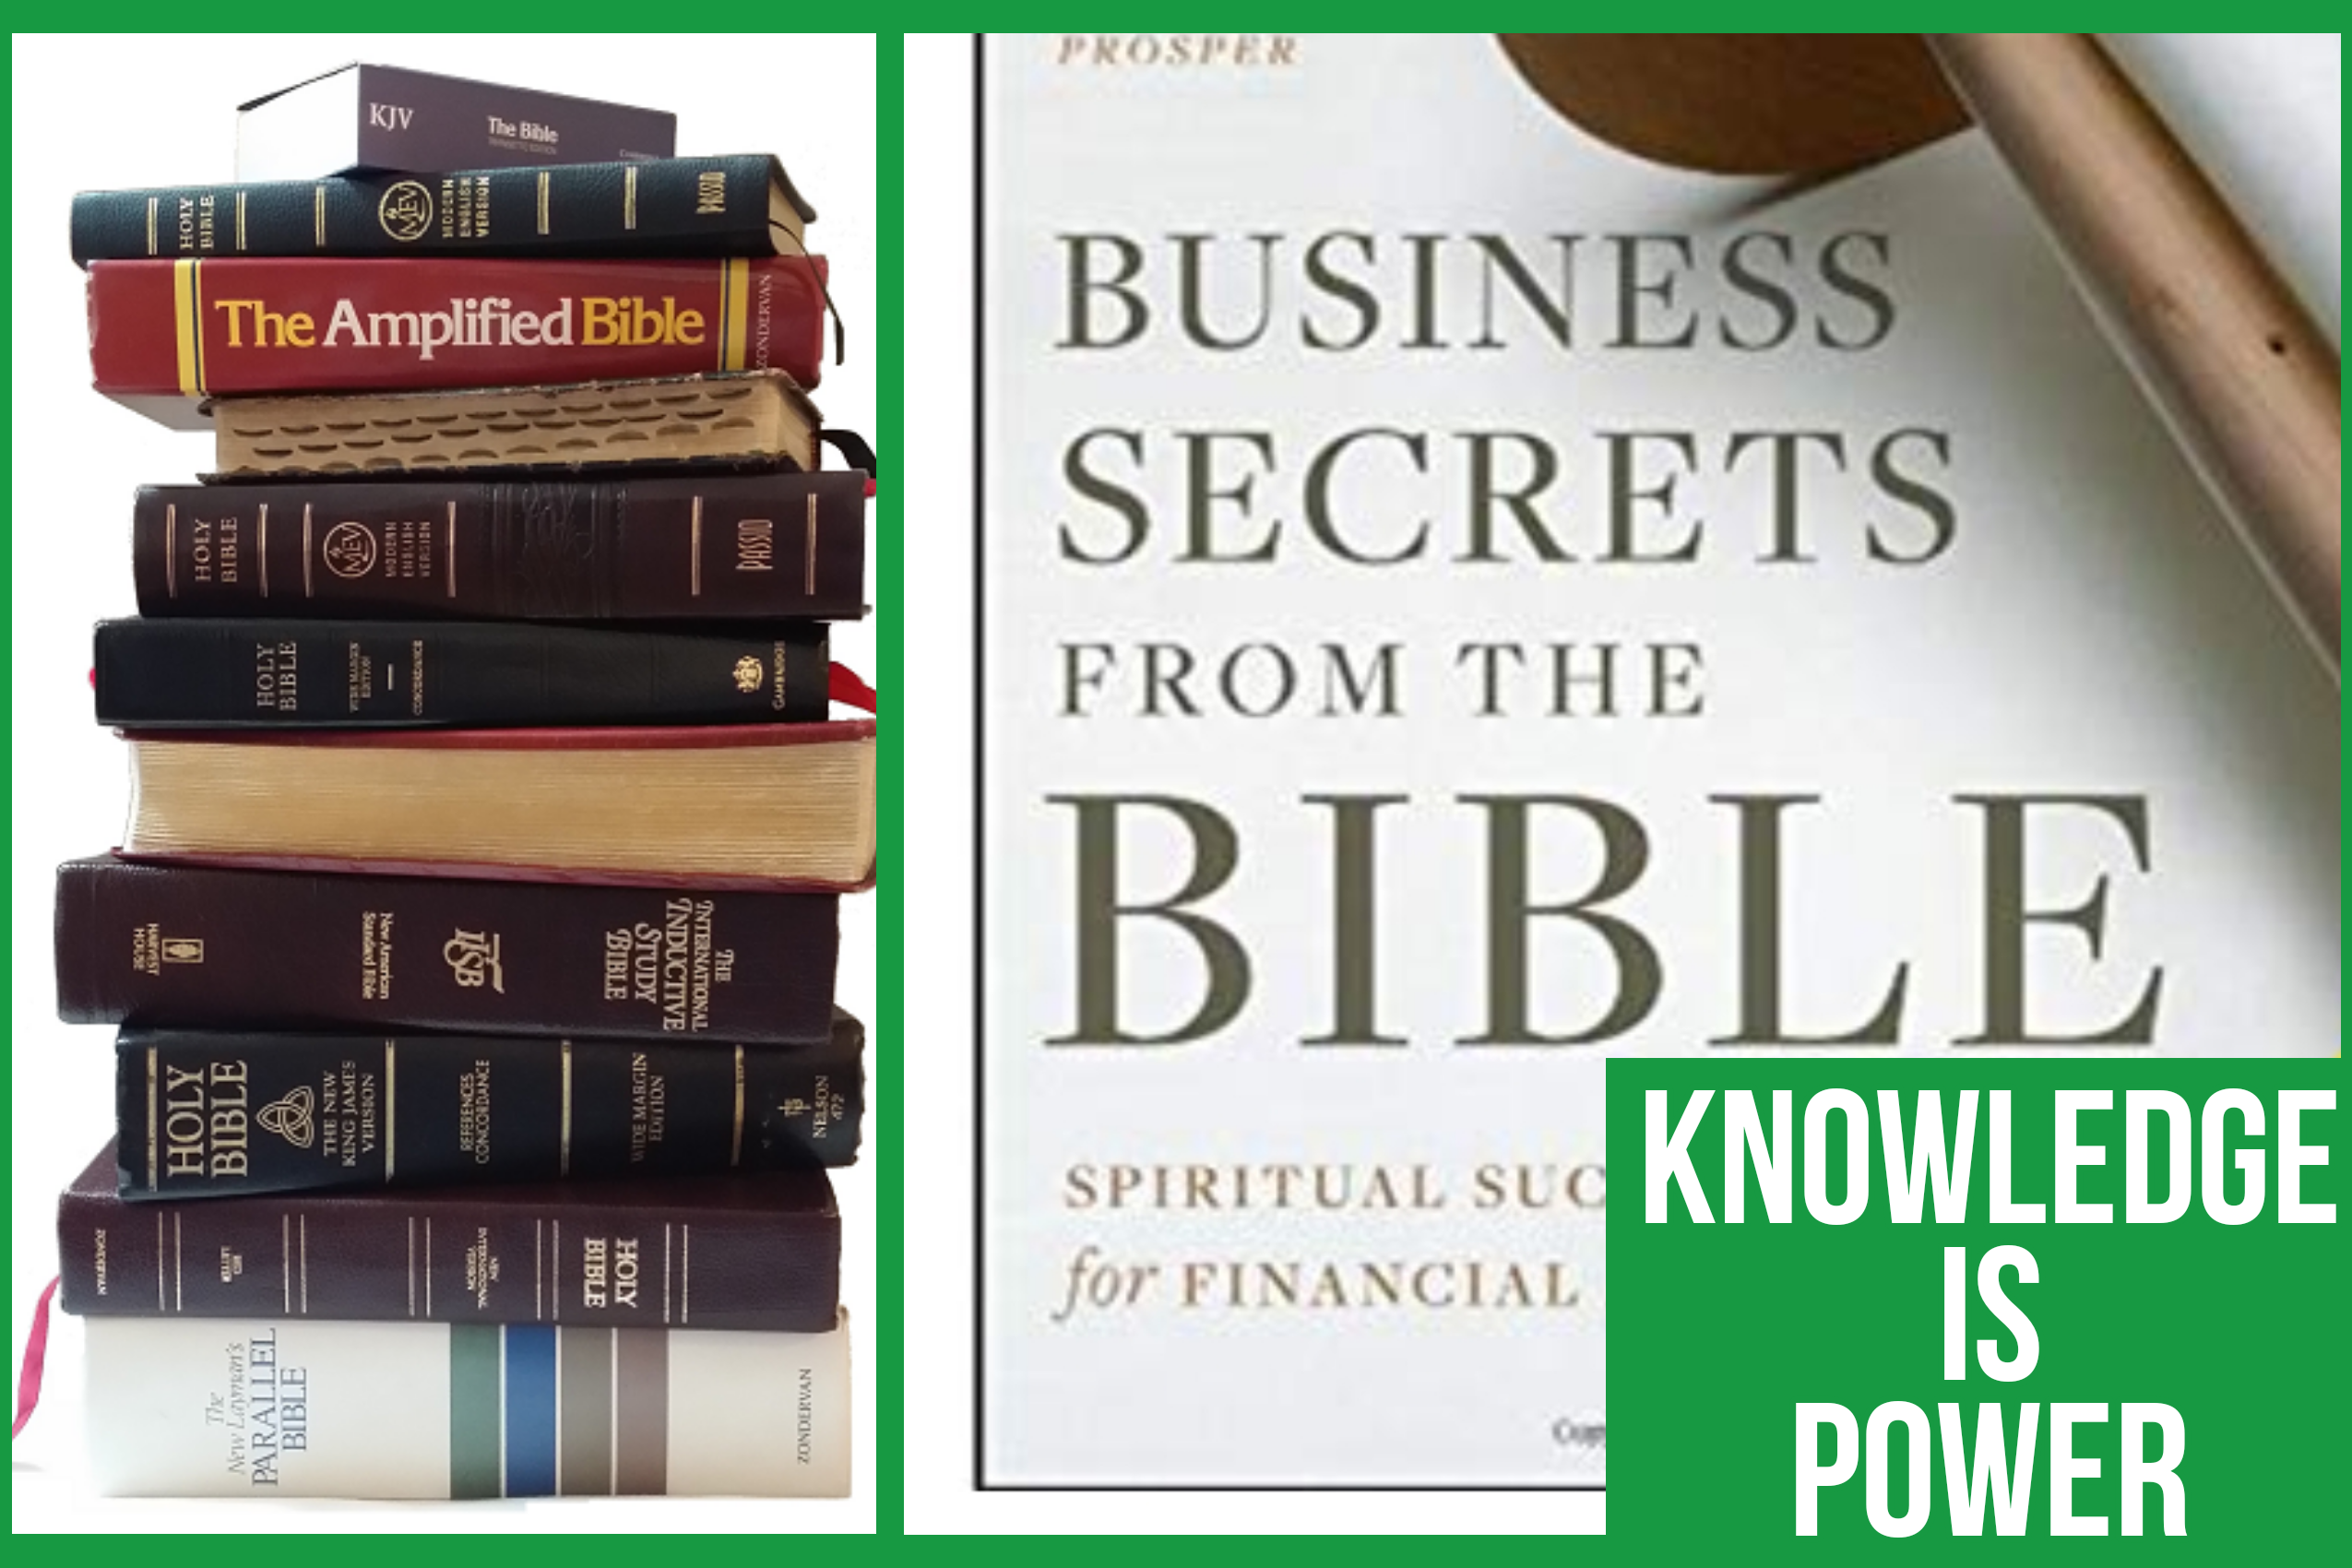 Bible Based Entrepreneurship: Biblical Business Practices